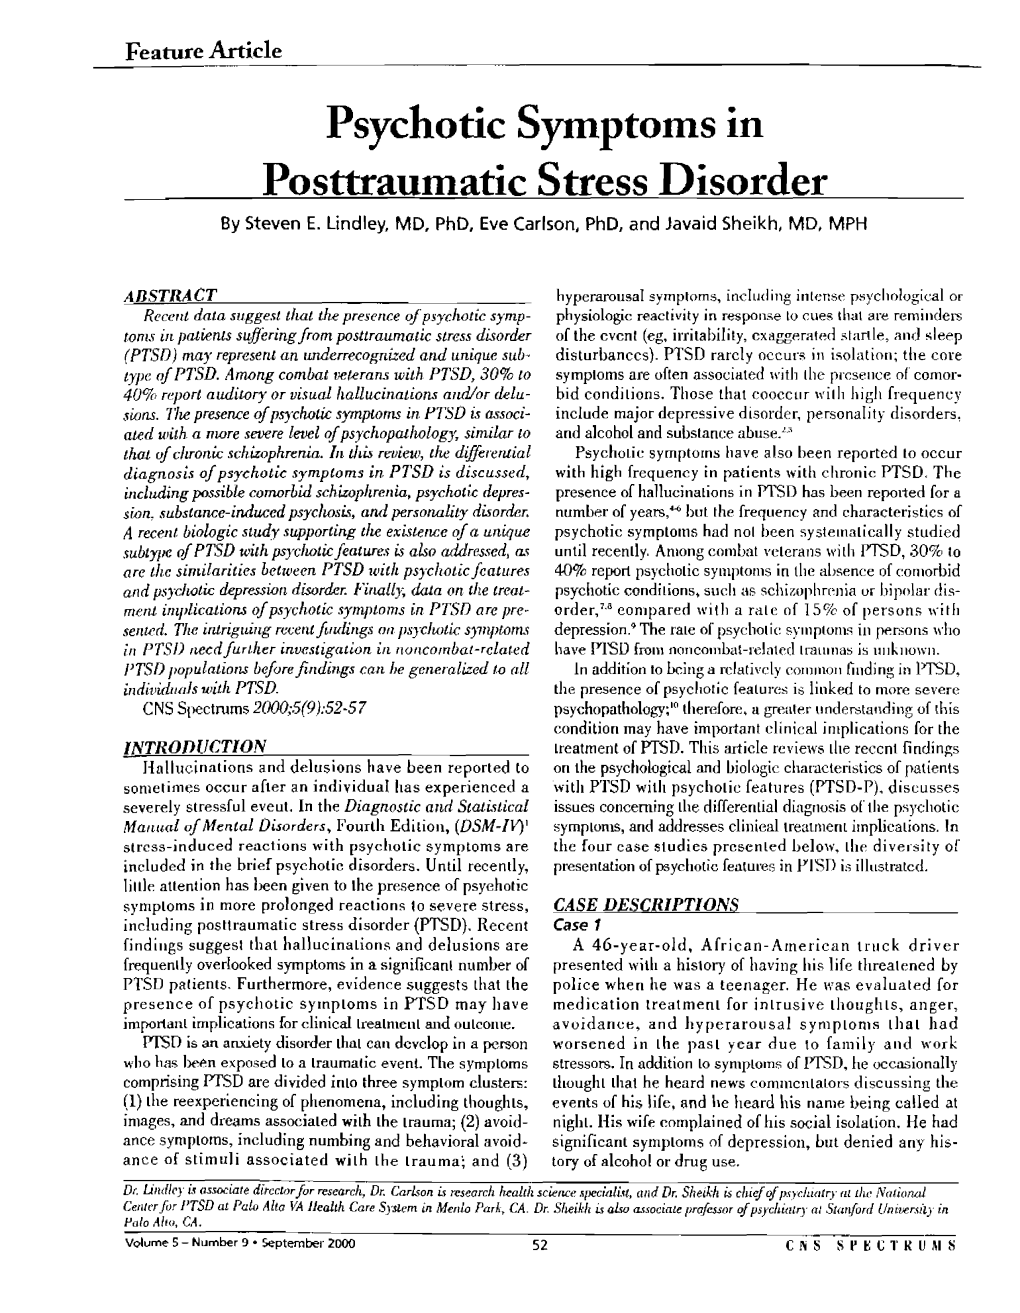 Psychotic Symptoms in Posttraumatic Stress Disorder by Steven E